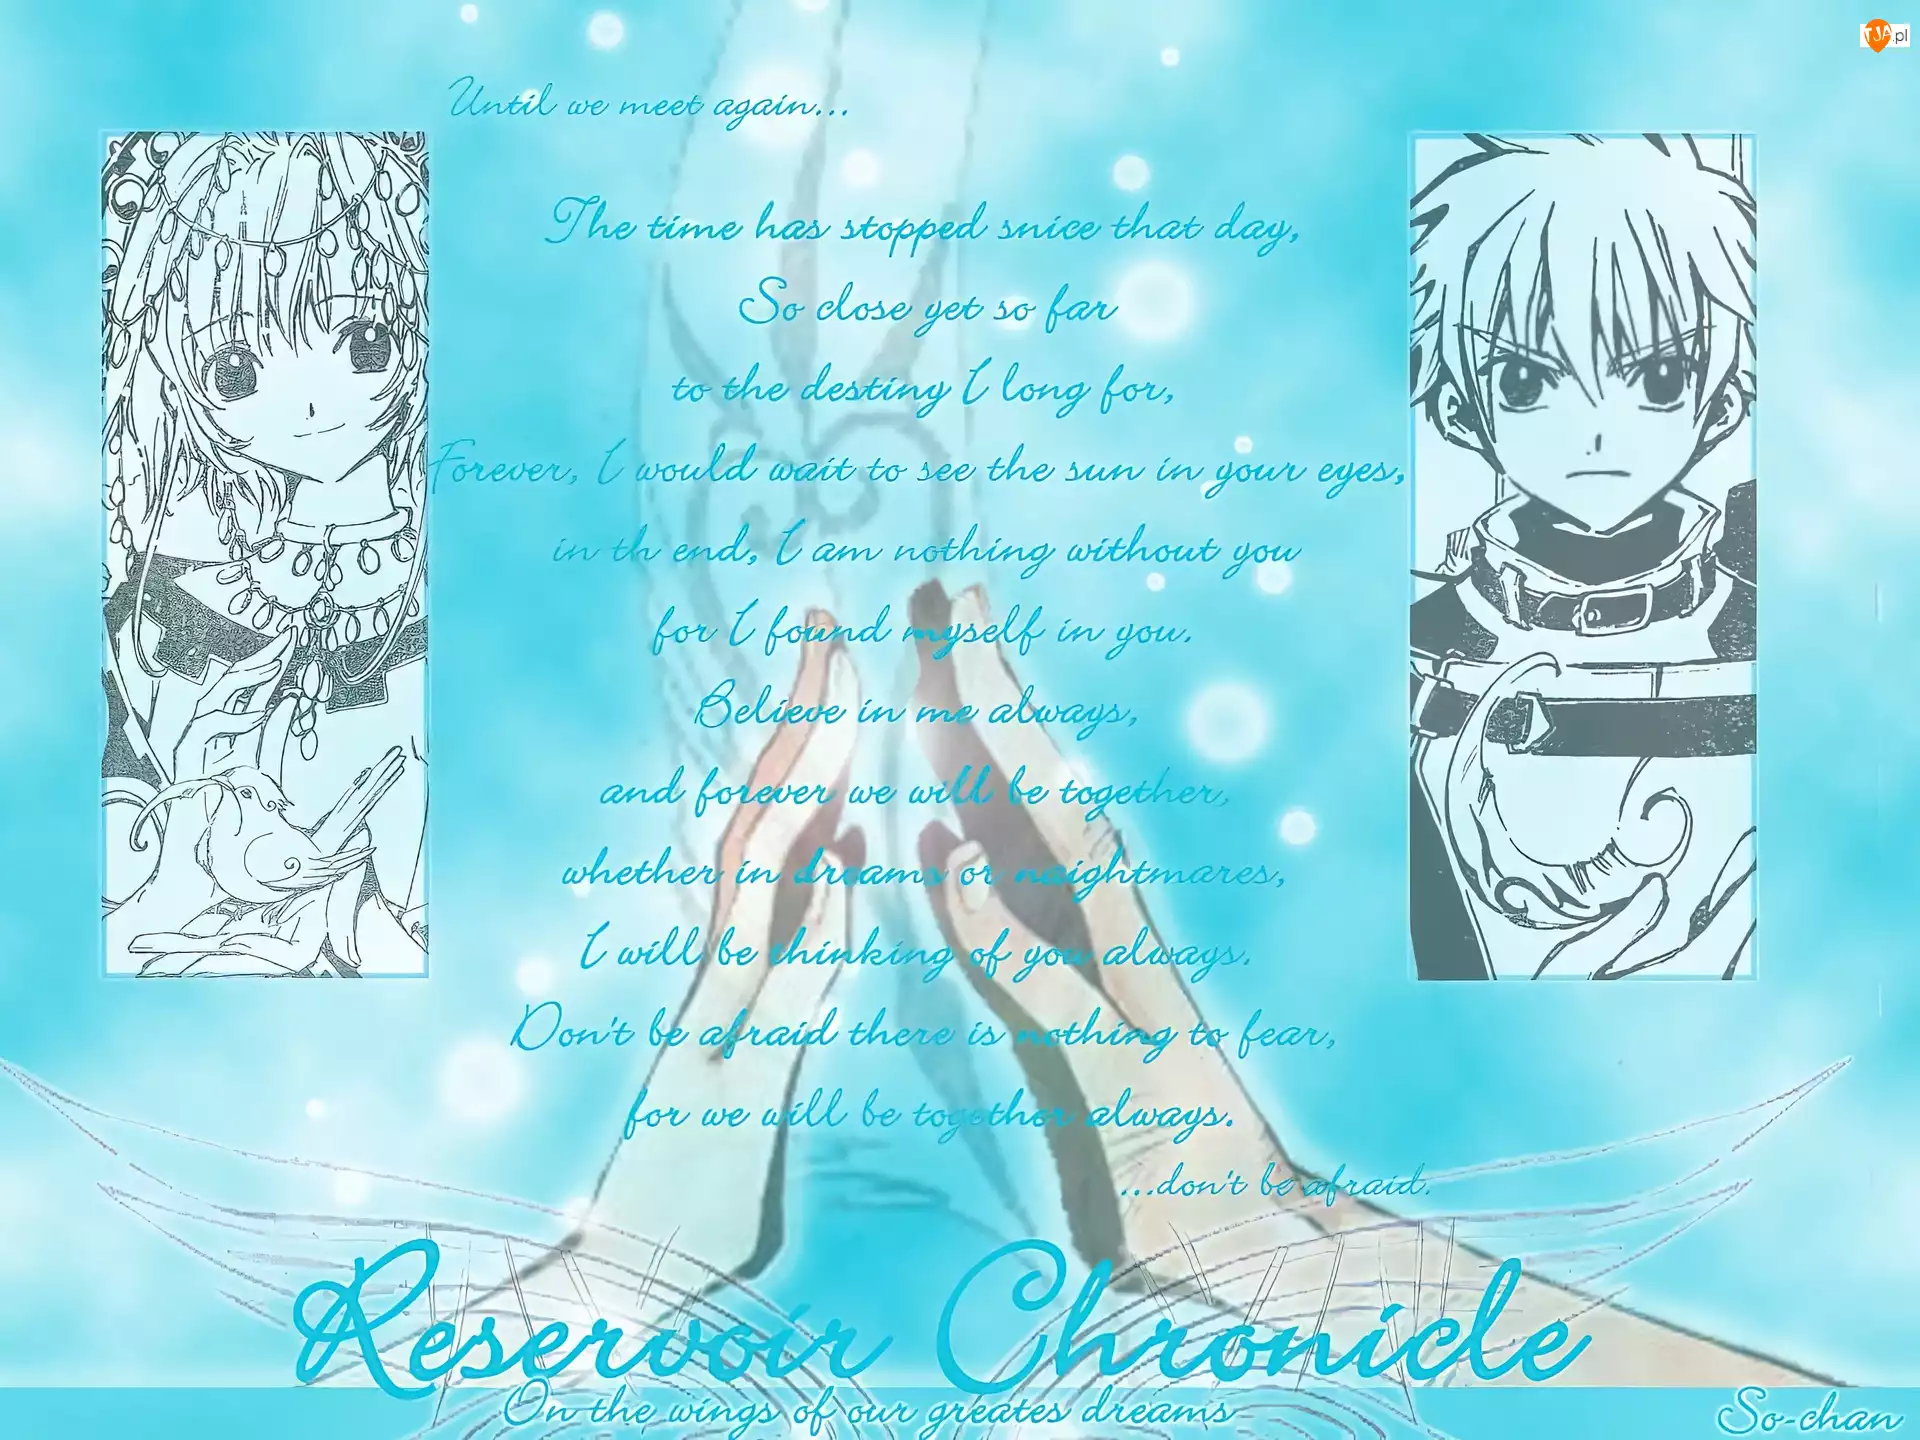 postacie, Tsubasa Reservoir Chronicles, dłonie, napisy